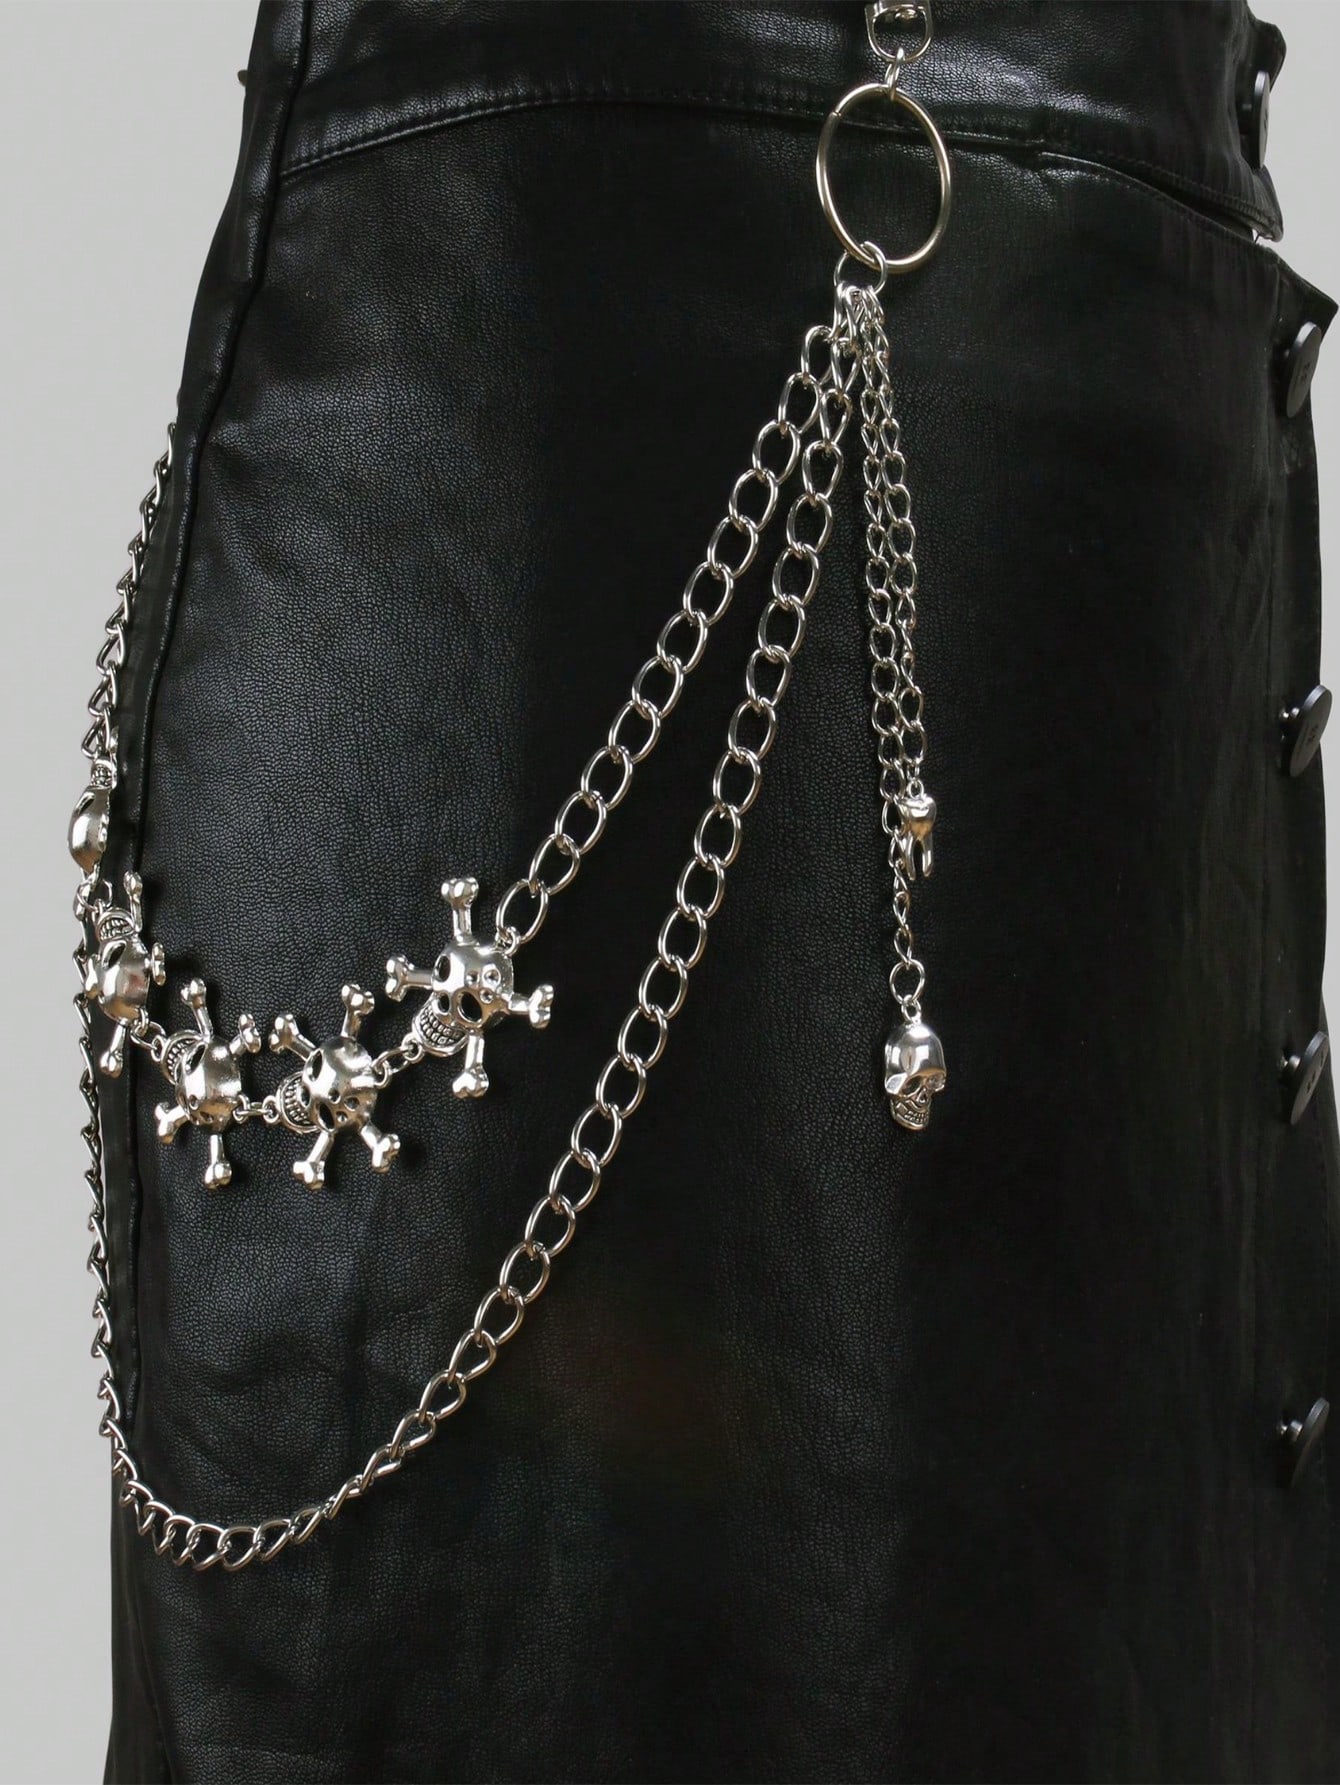 ROMWE гранж-панк 1 шт. женская многослойная цепочка для брюк с декором в виде черепа, серебро фото